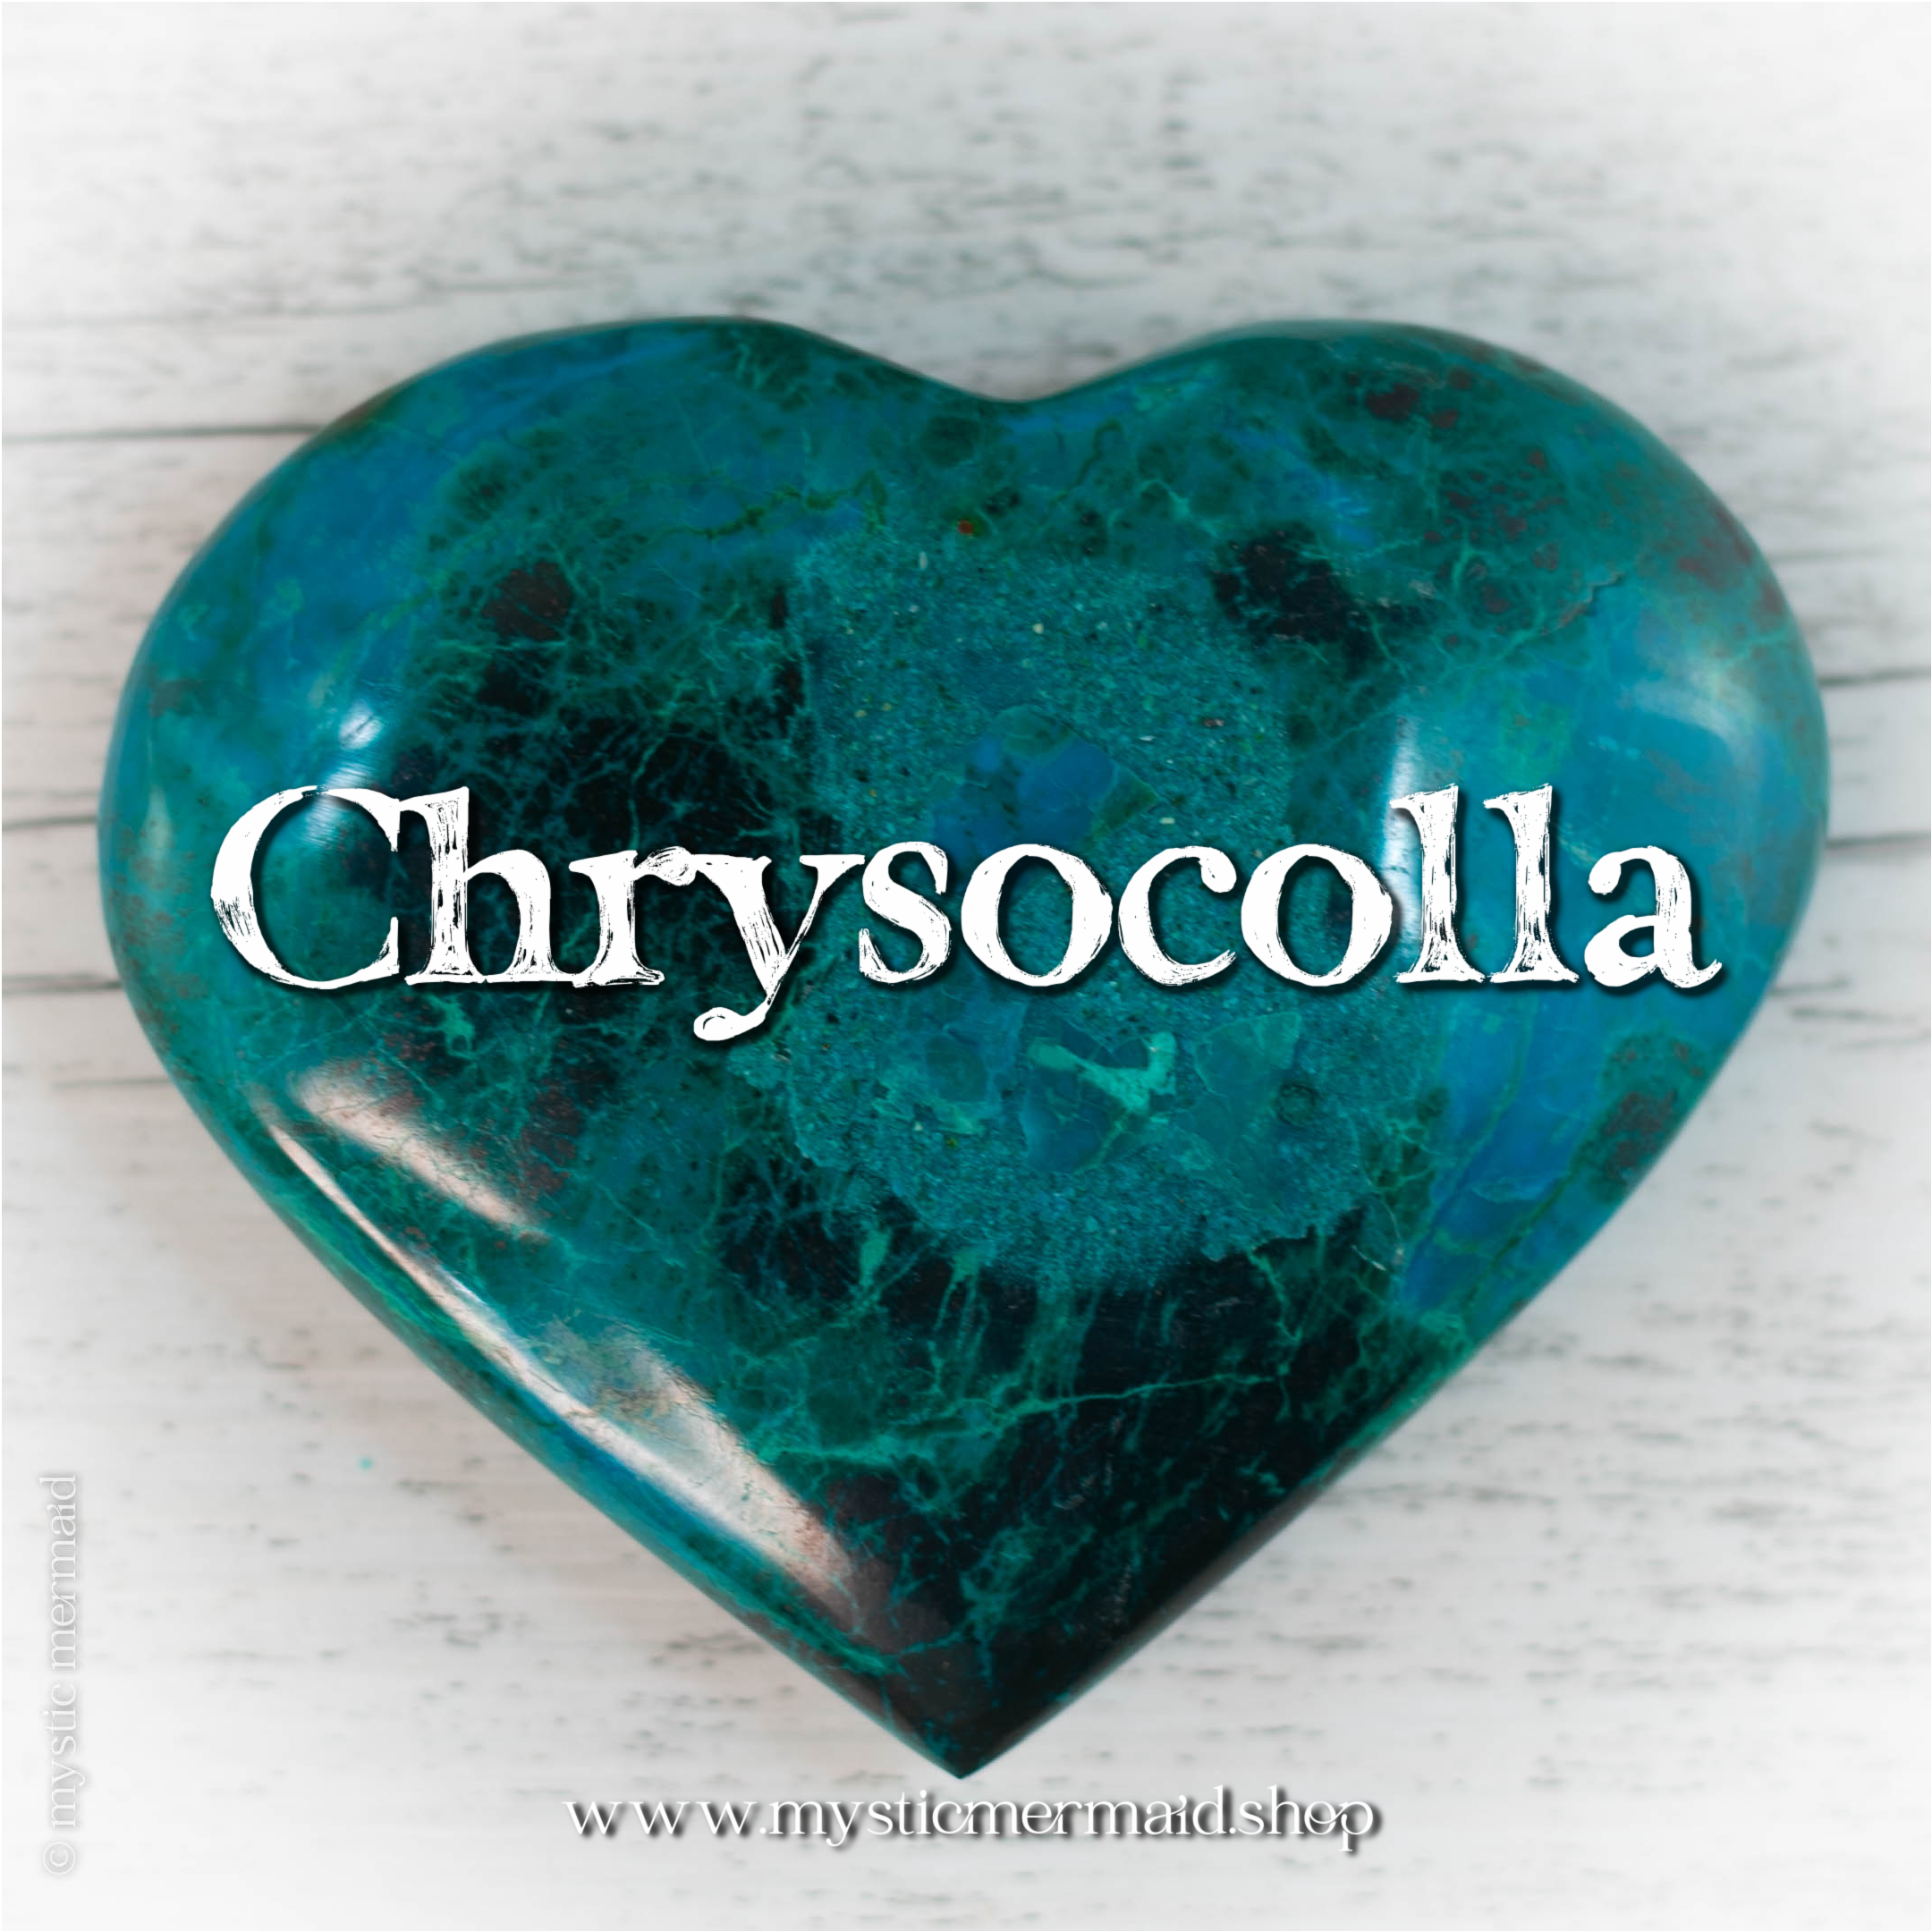 Chrysocolla available from Mystic Mermaid www.mysticmermaid.shop